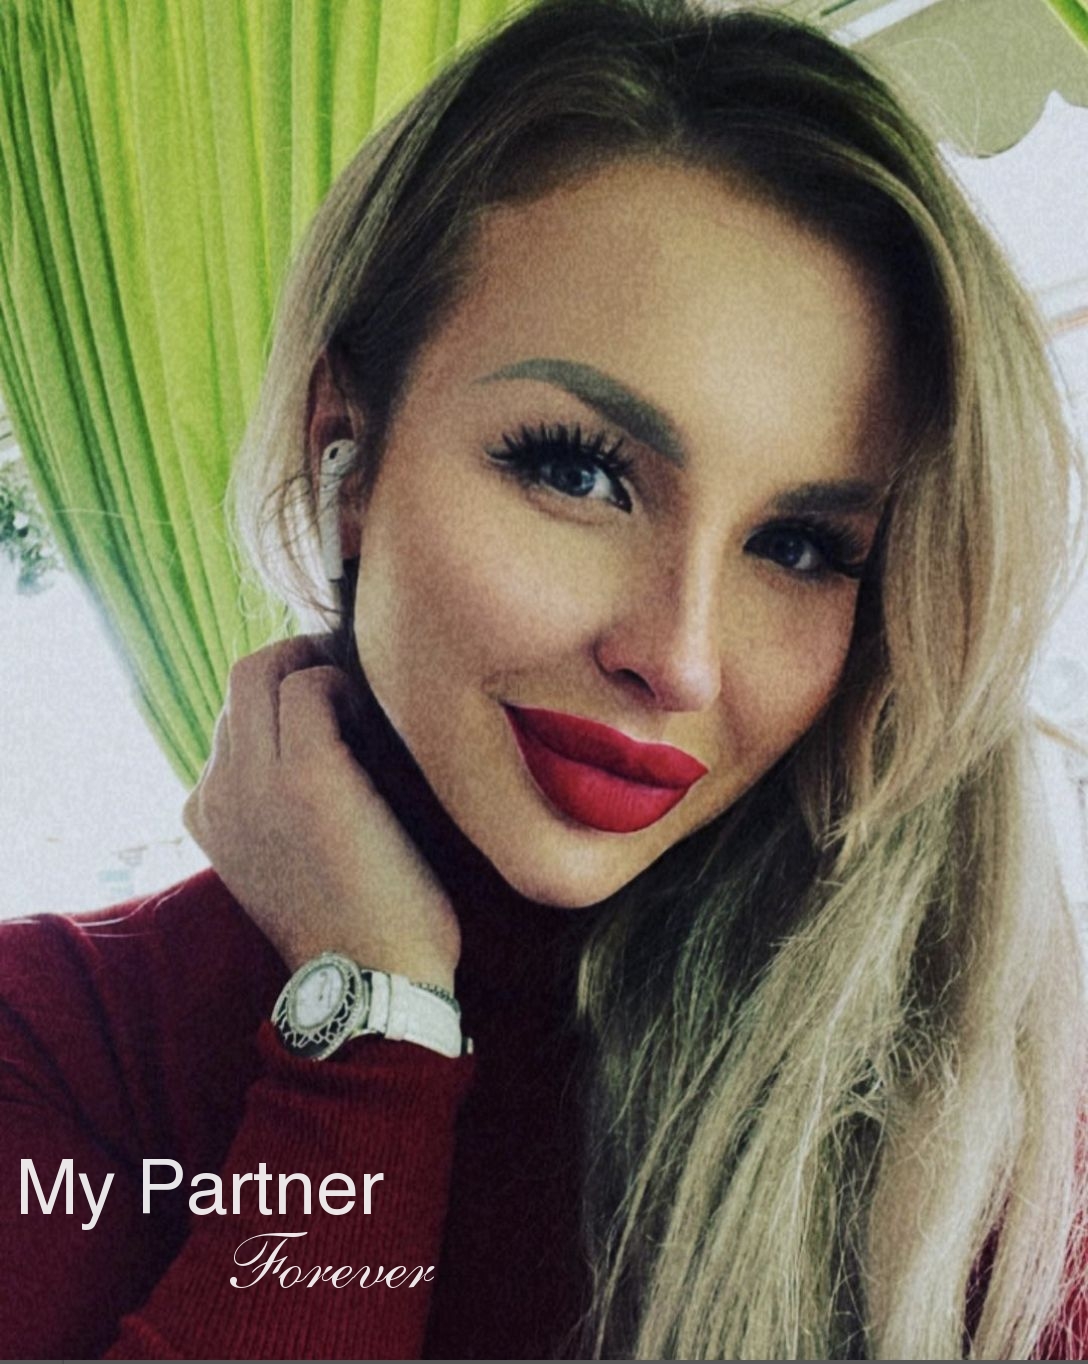 Datingsite to Meet Stunning Ukrainian Lady Viktoriya from Kiev, Ukraine